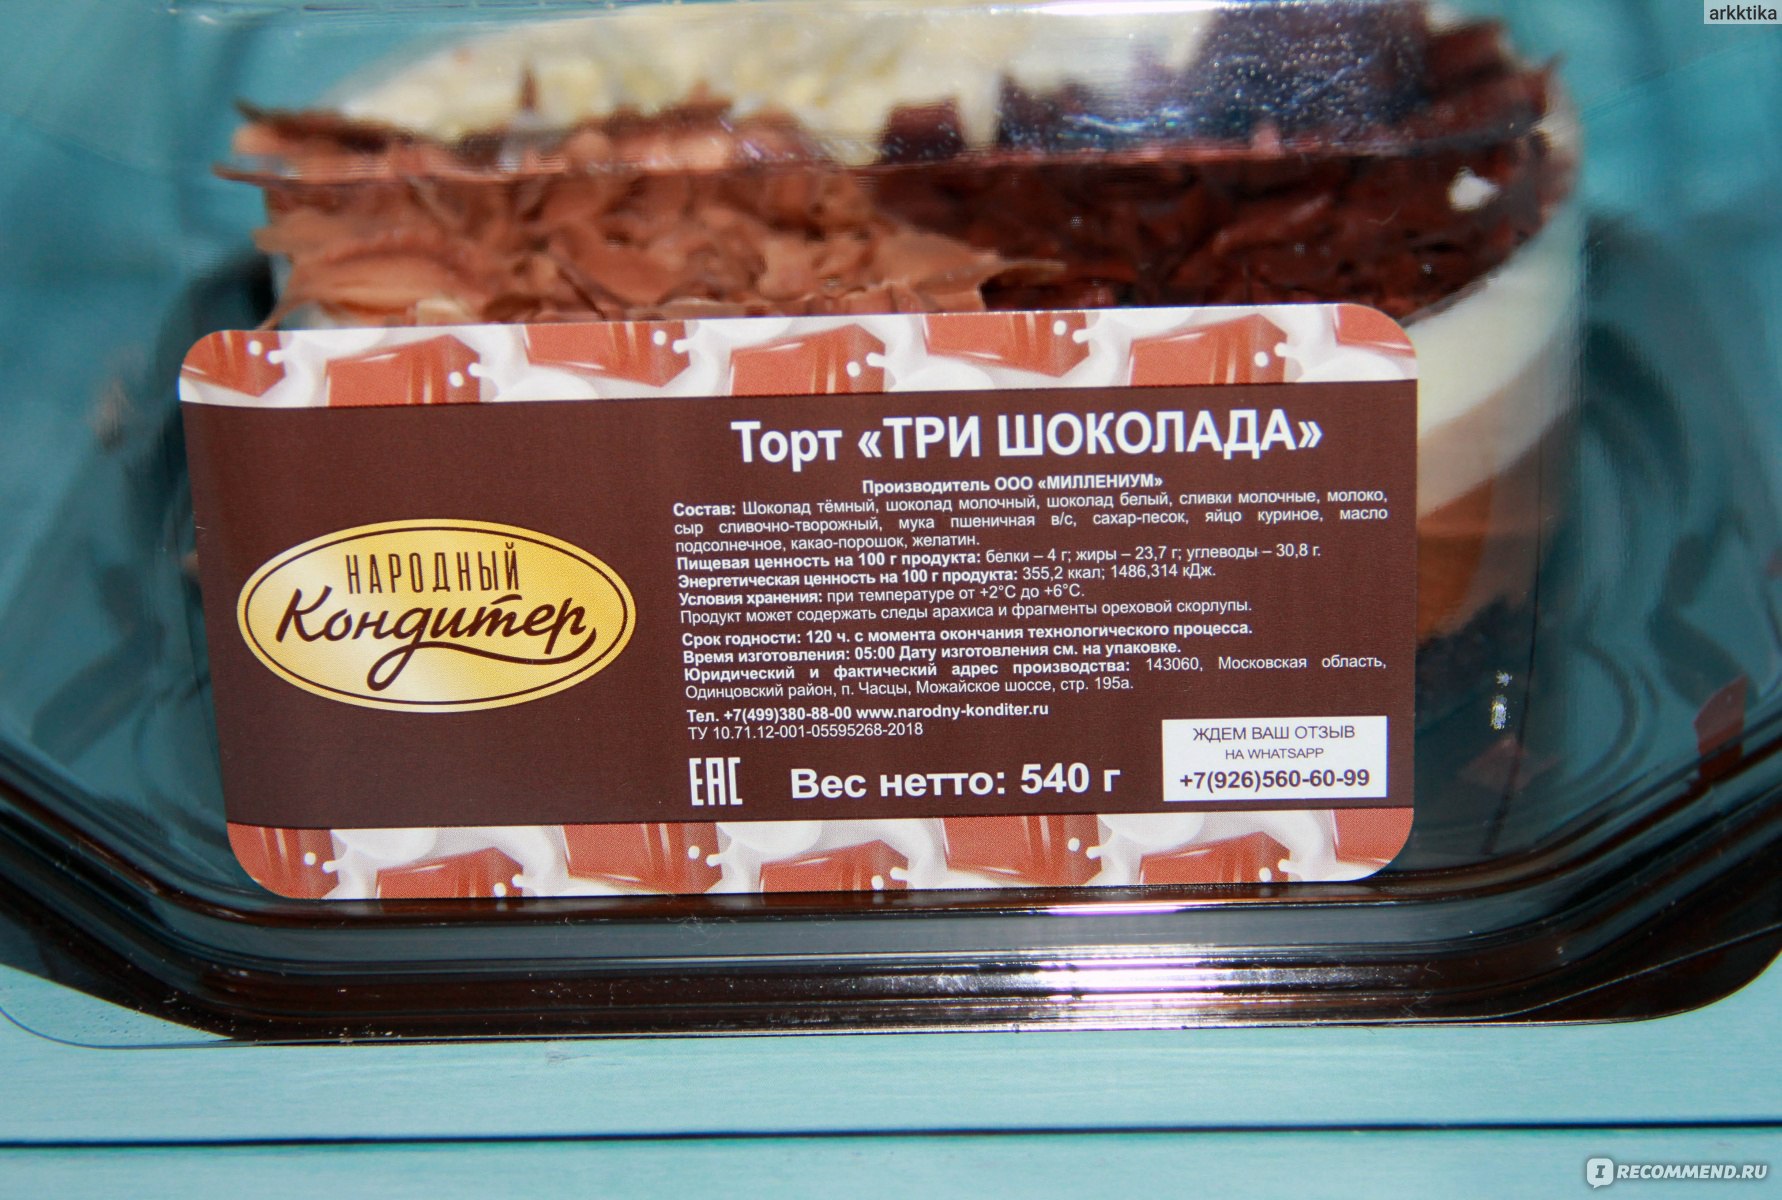 Торт Агзамов (Народный кондитер) "Три шоколада" фото